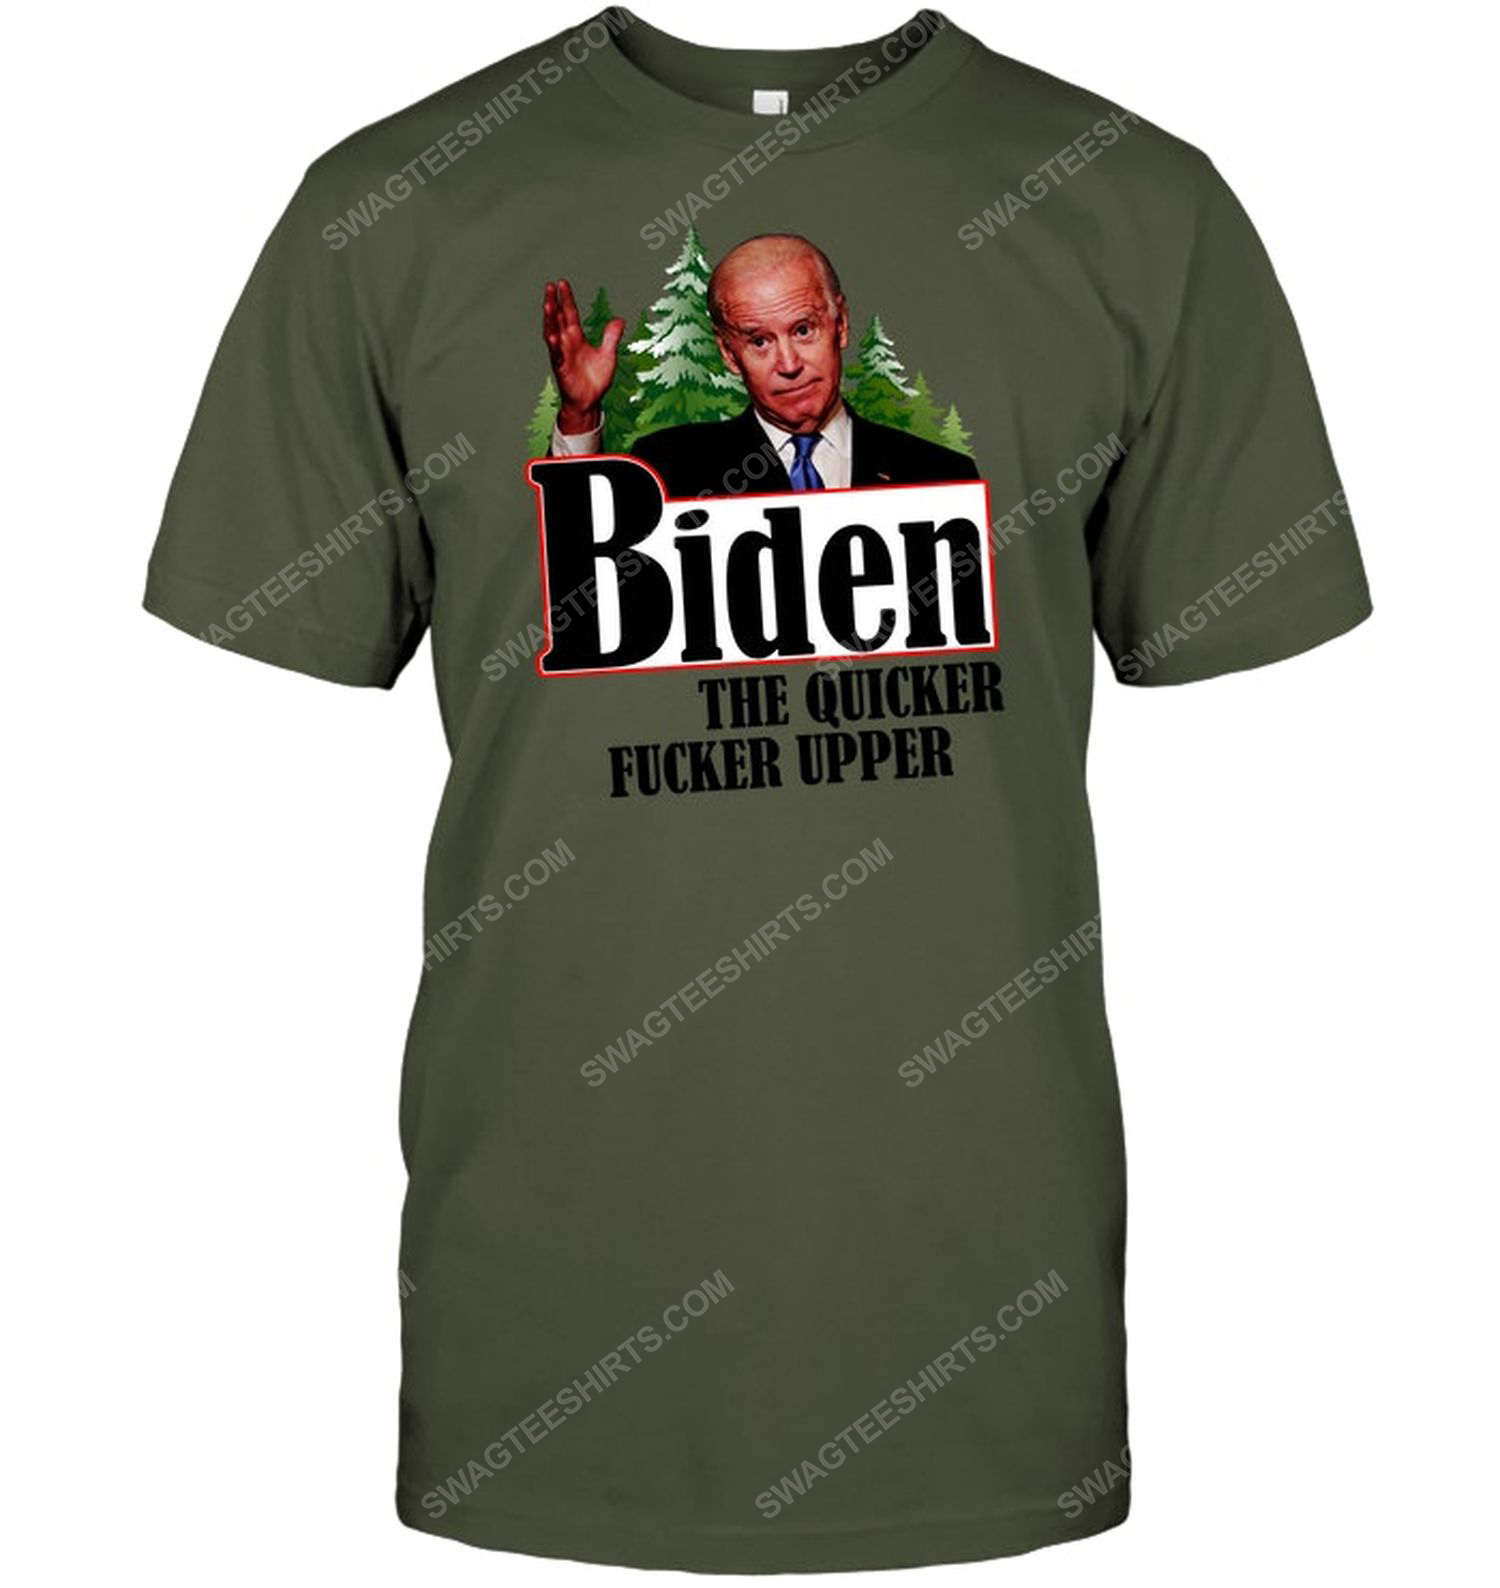 Biden the quicker fucker upper political tshirt